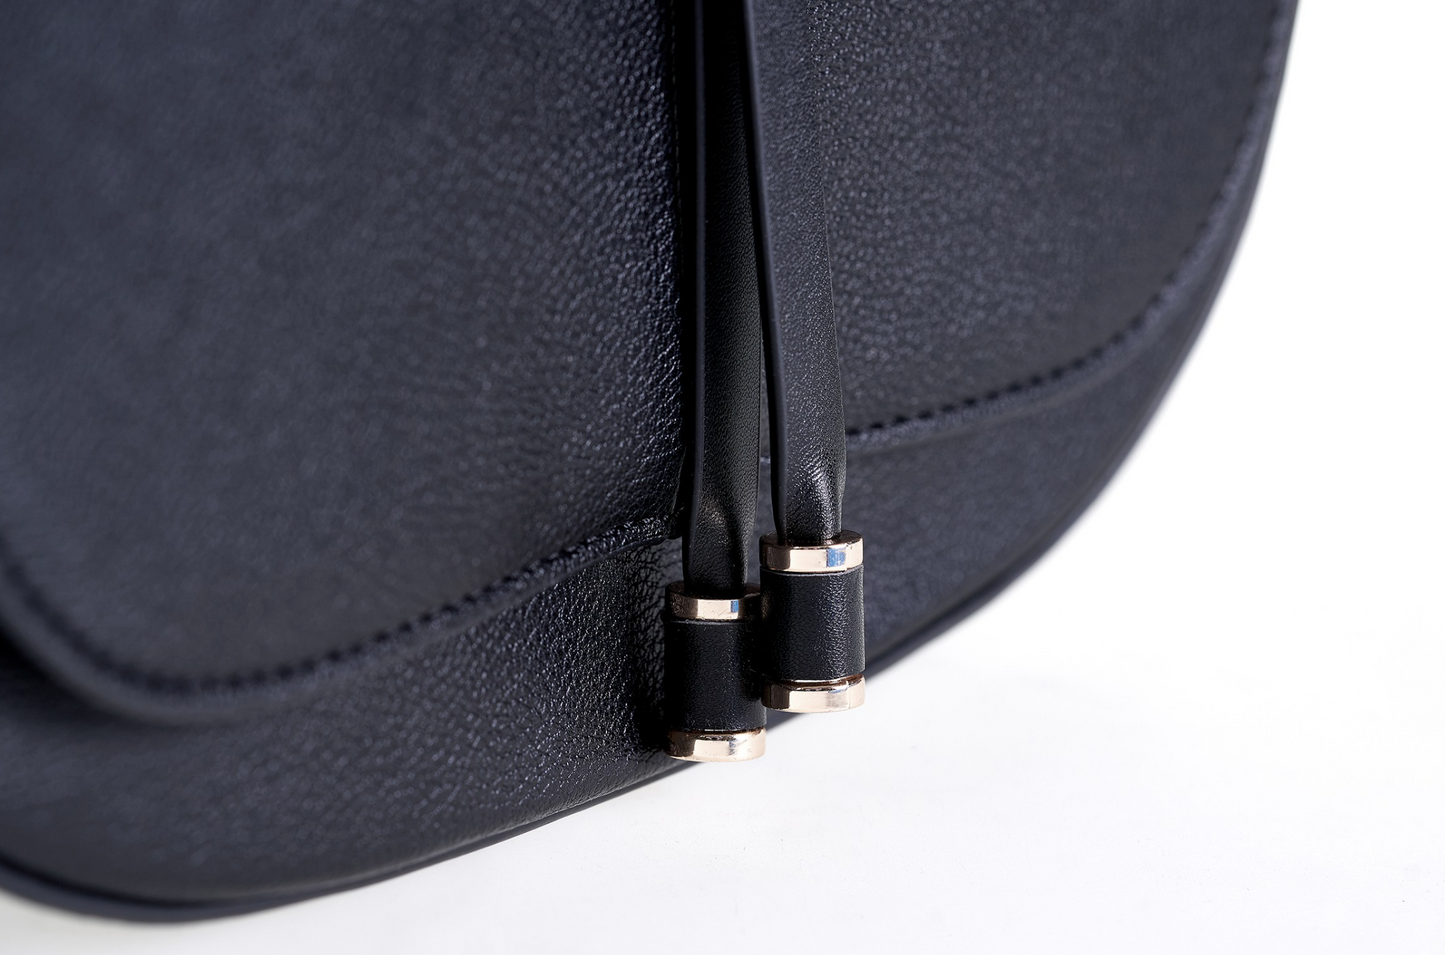 Pierre Cardin eco leather black handbag for women